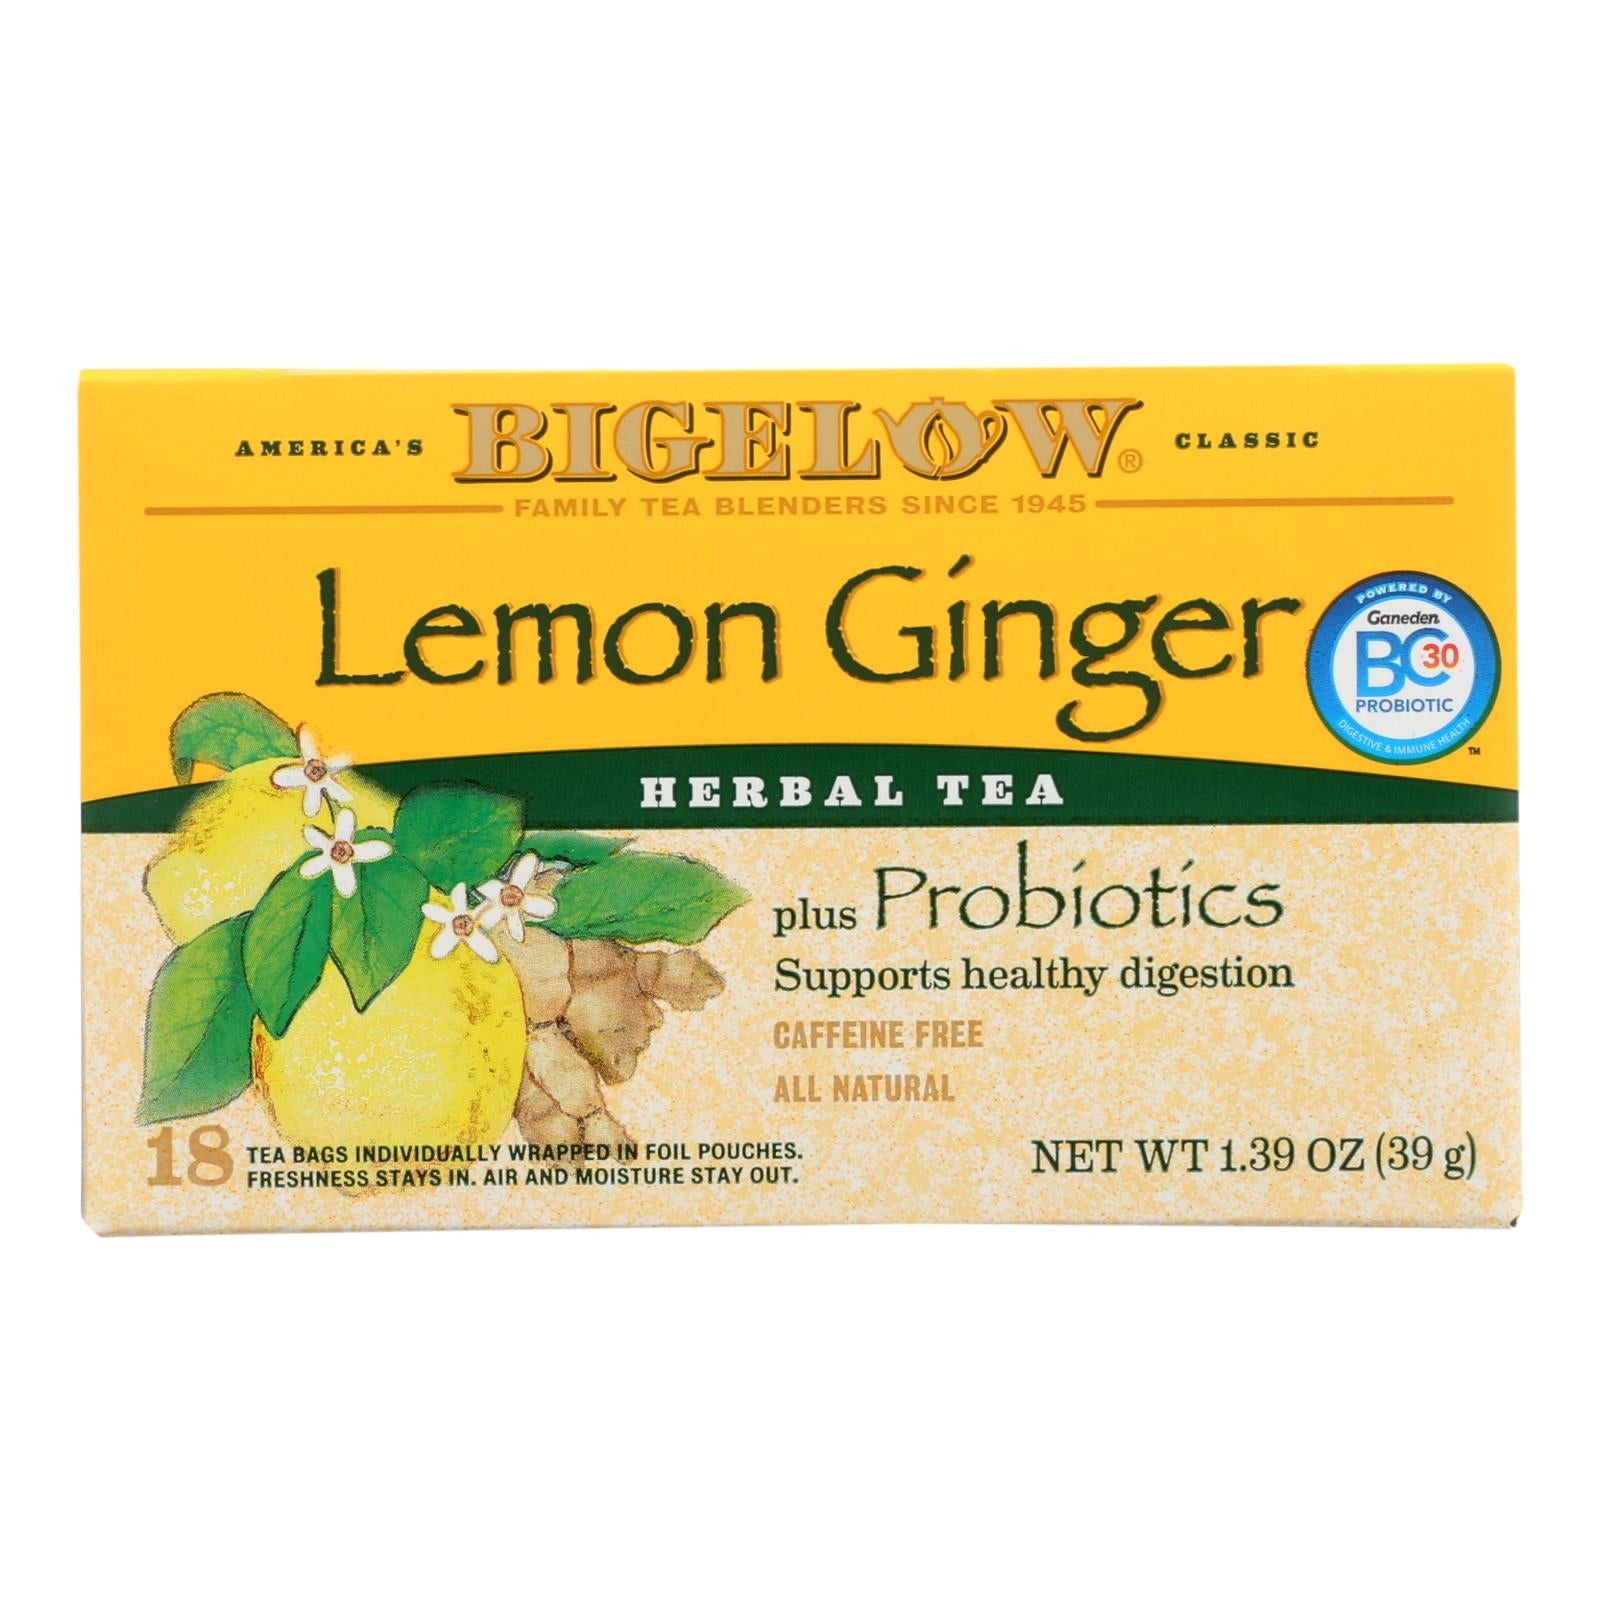 Bigelow Benefits Calm Stomach Ginger Peach Herbal Tea, 18 Tea Bags